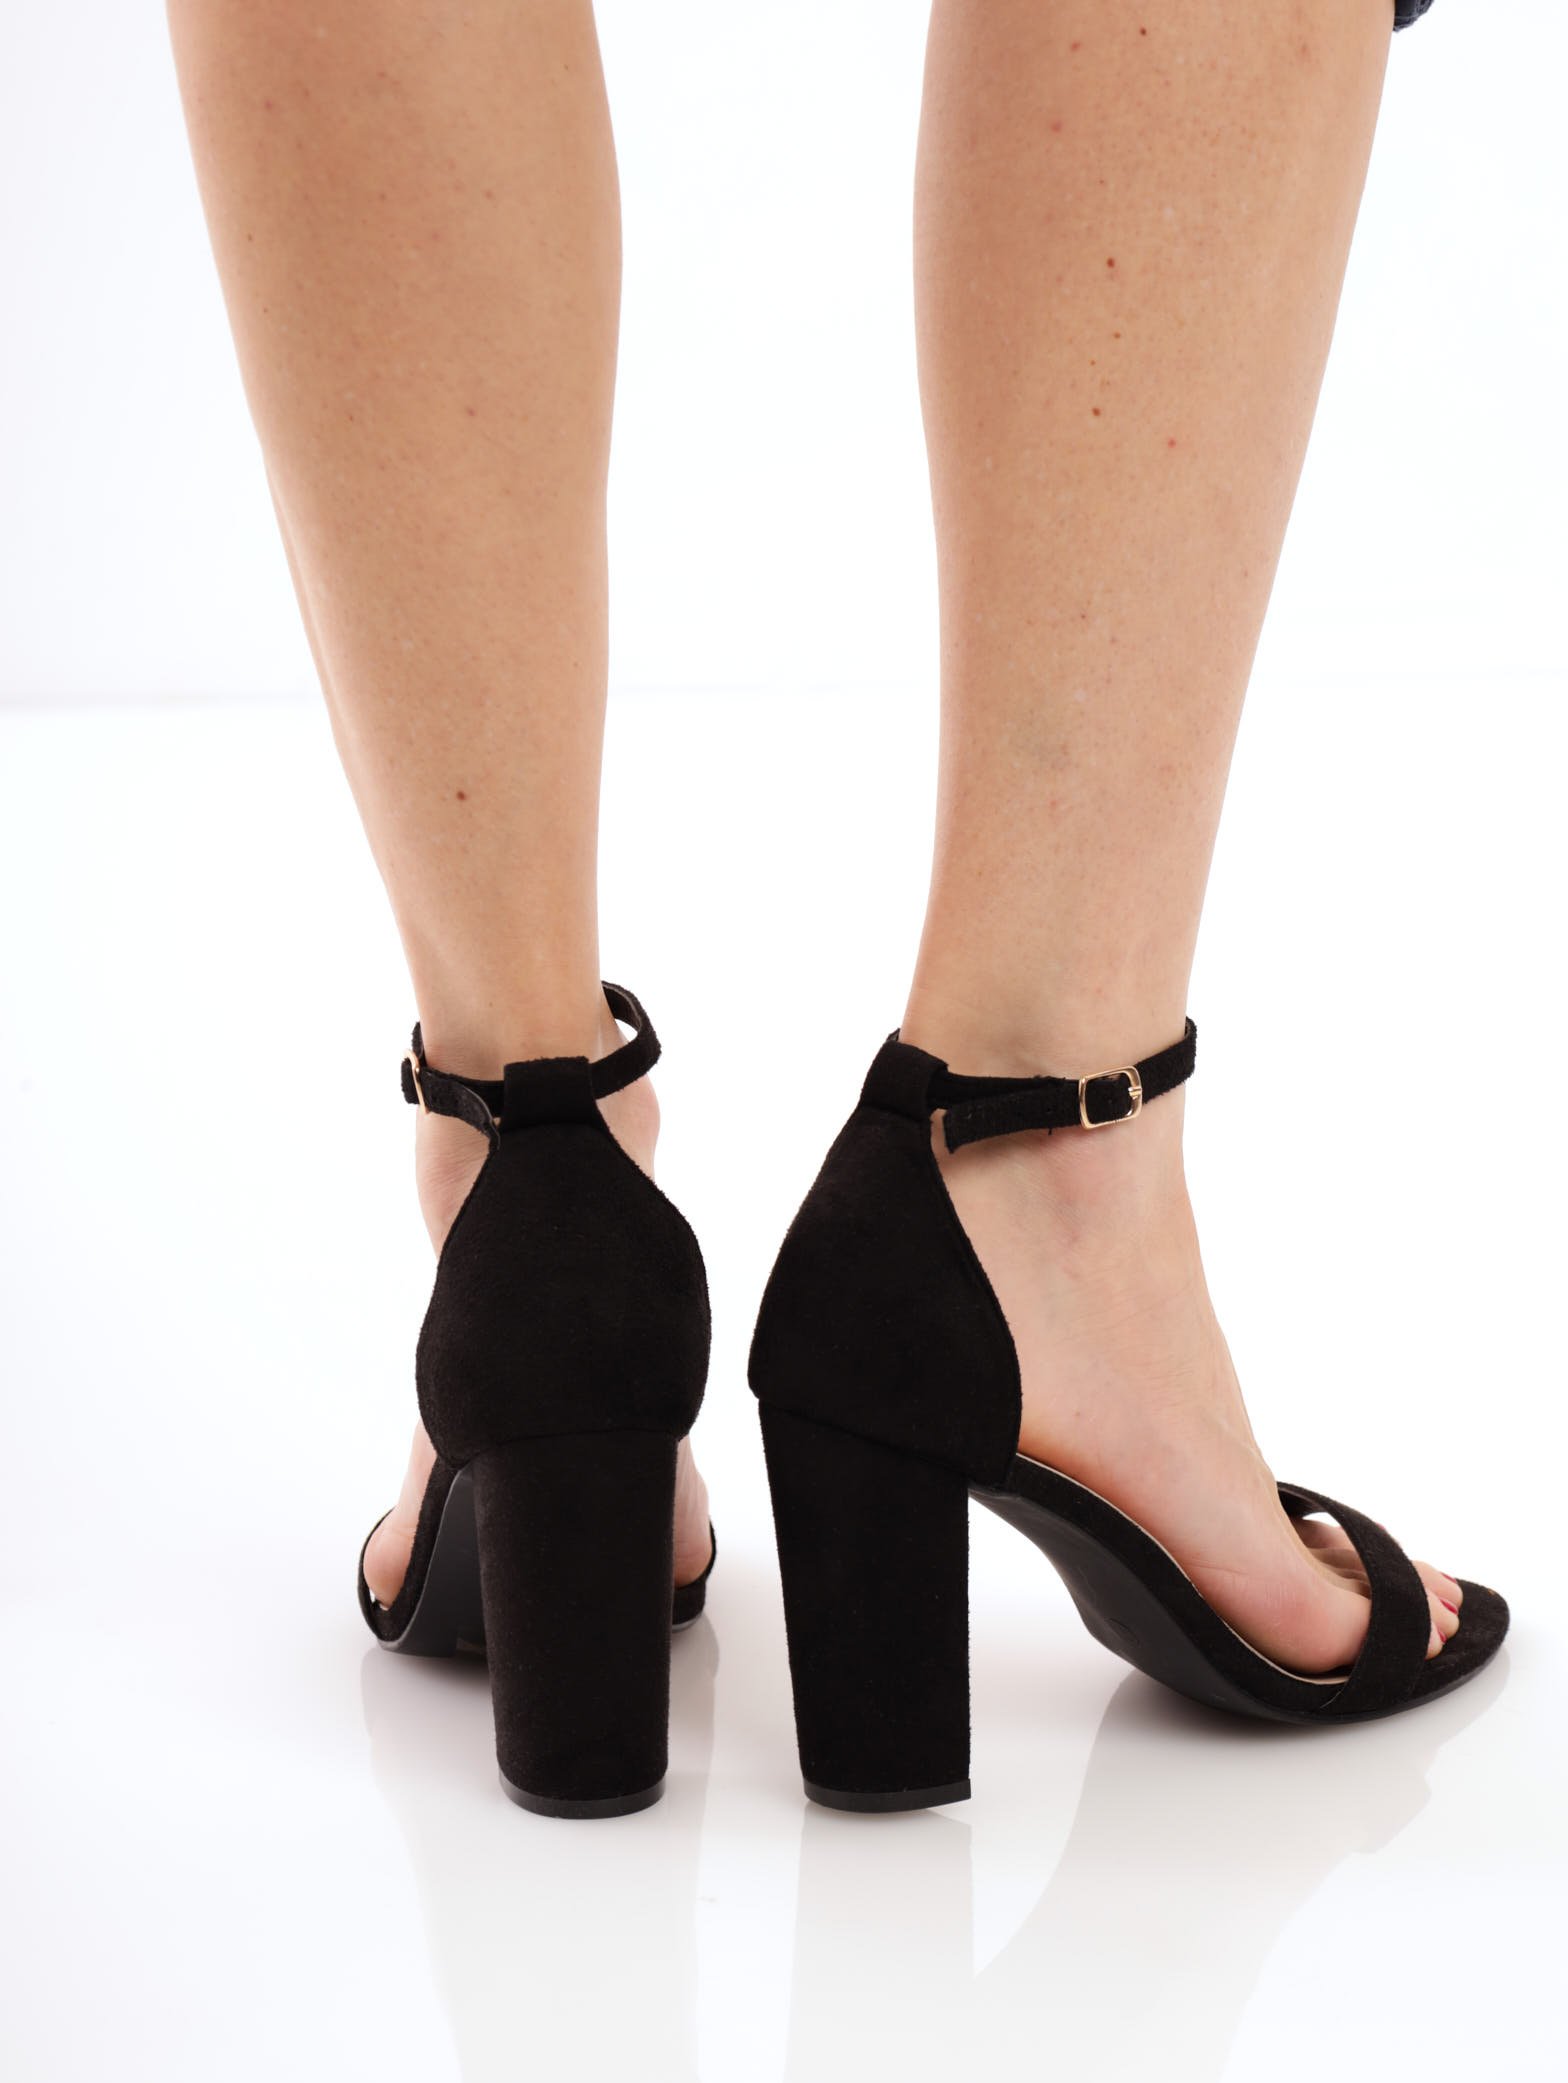 Ivory Wedding Shoes Block Heel | Velvet | Greek Chic Handmades